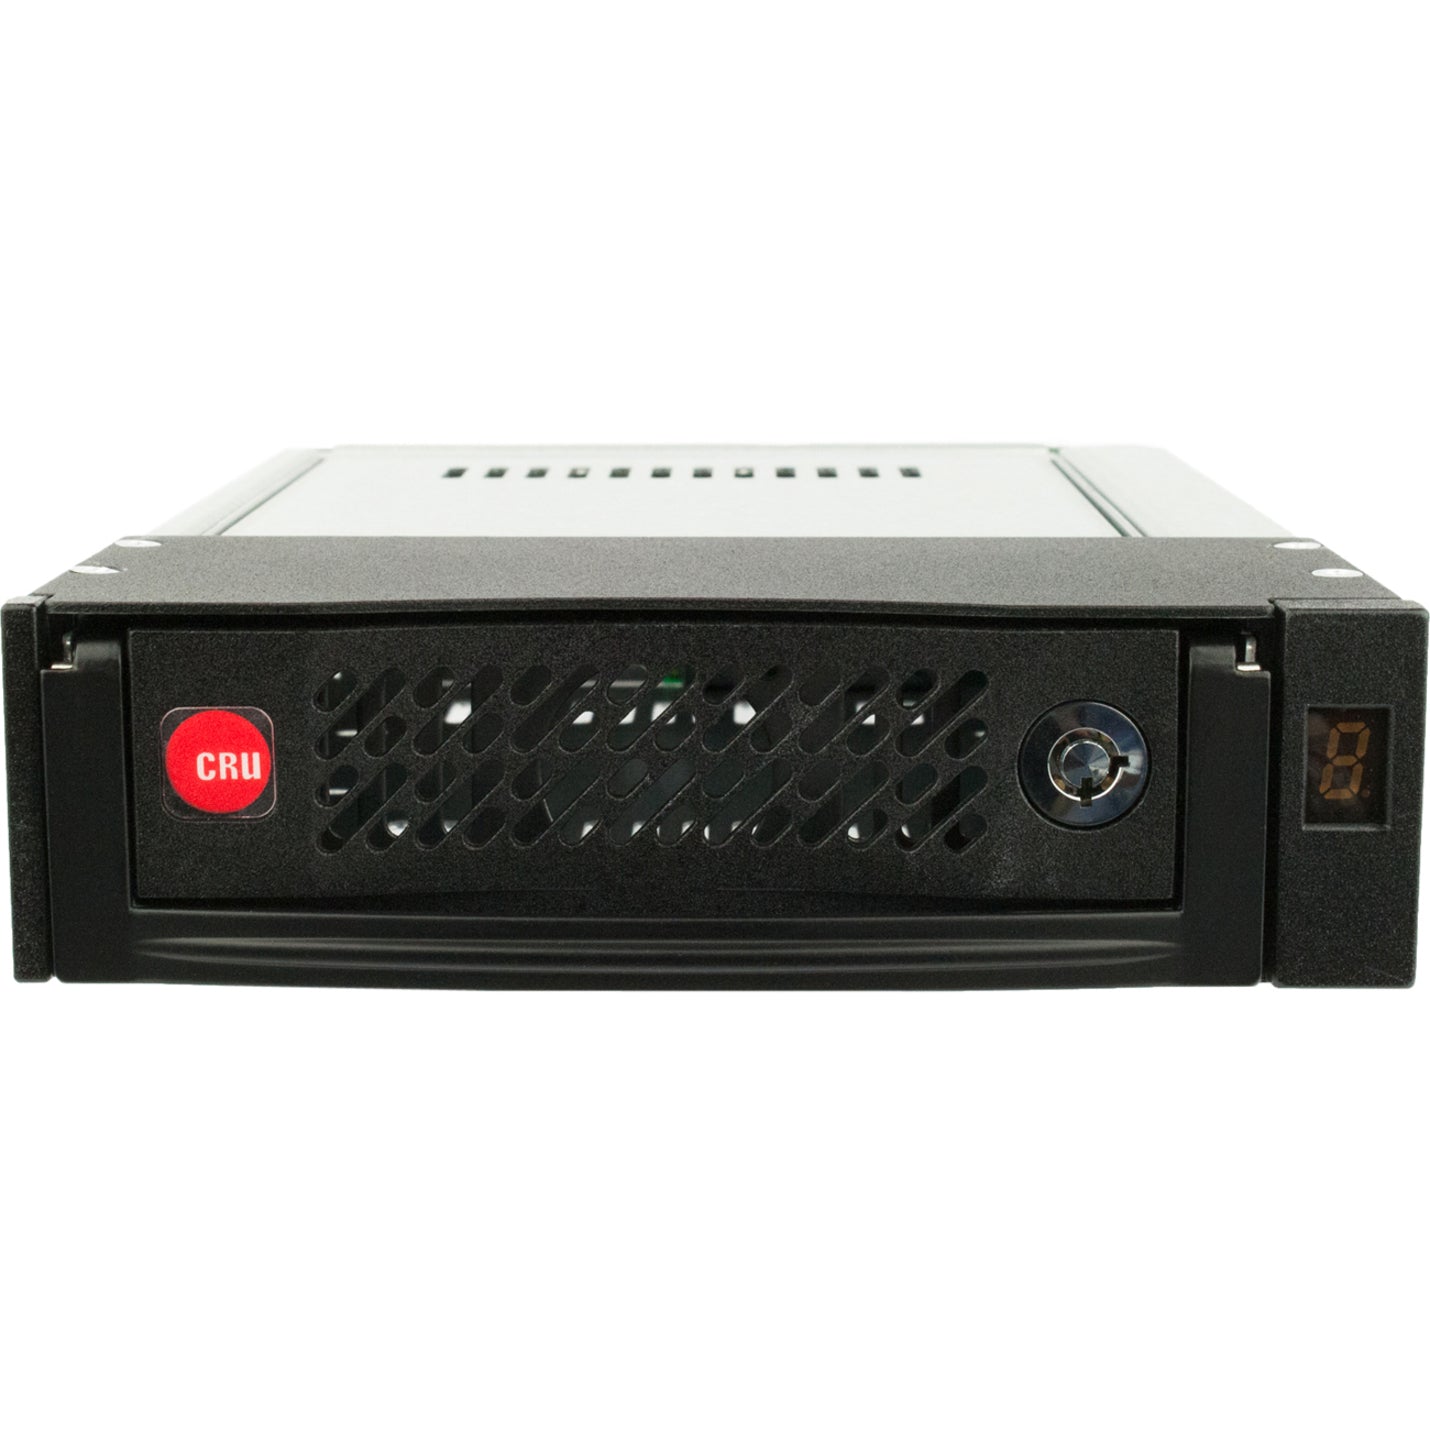 CRU 6547-6400-0500 Carrier for DE110 SATA 6G, Accepts SATA Drives, Black